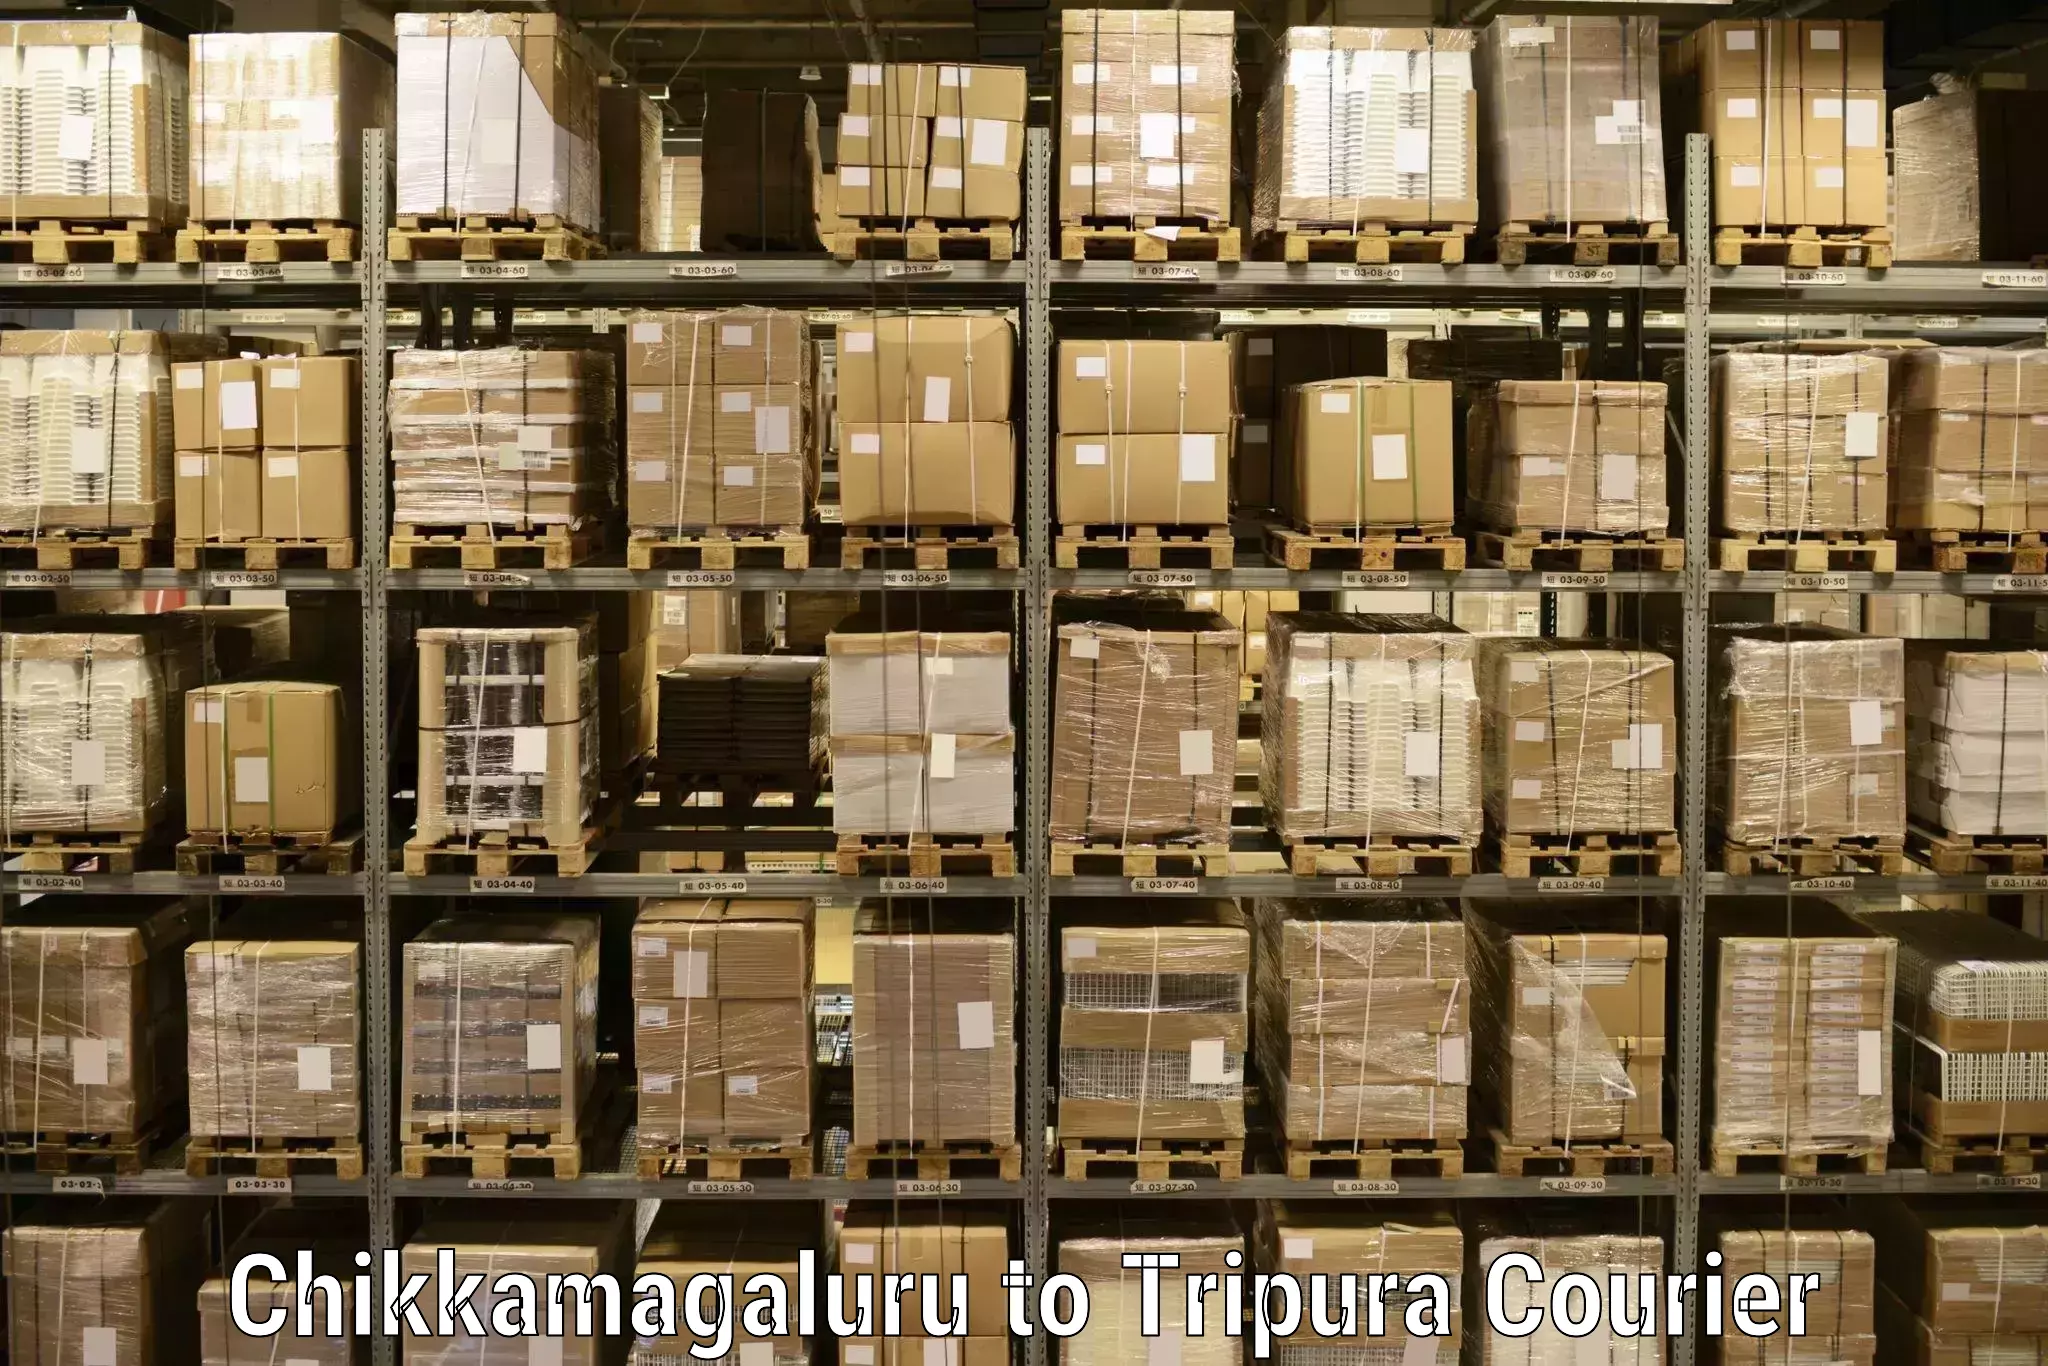 Courier service efficiency Chikkamagaluru to Tripura